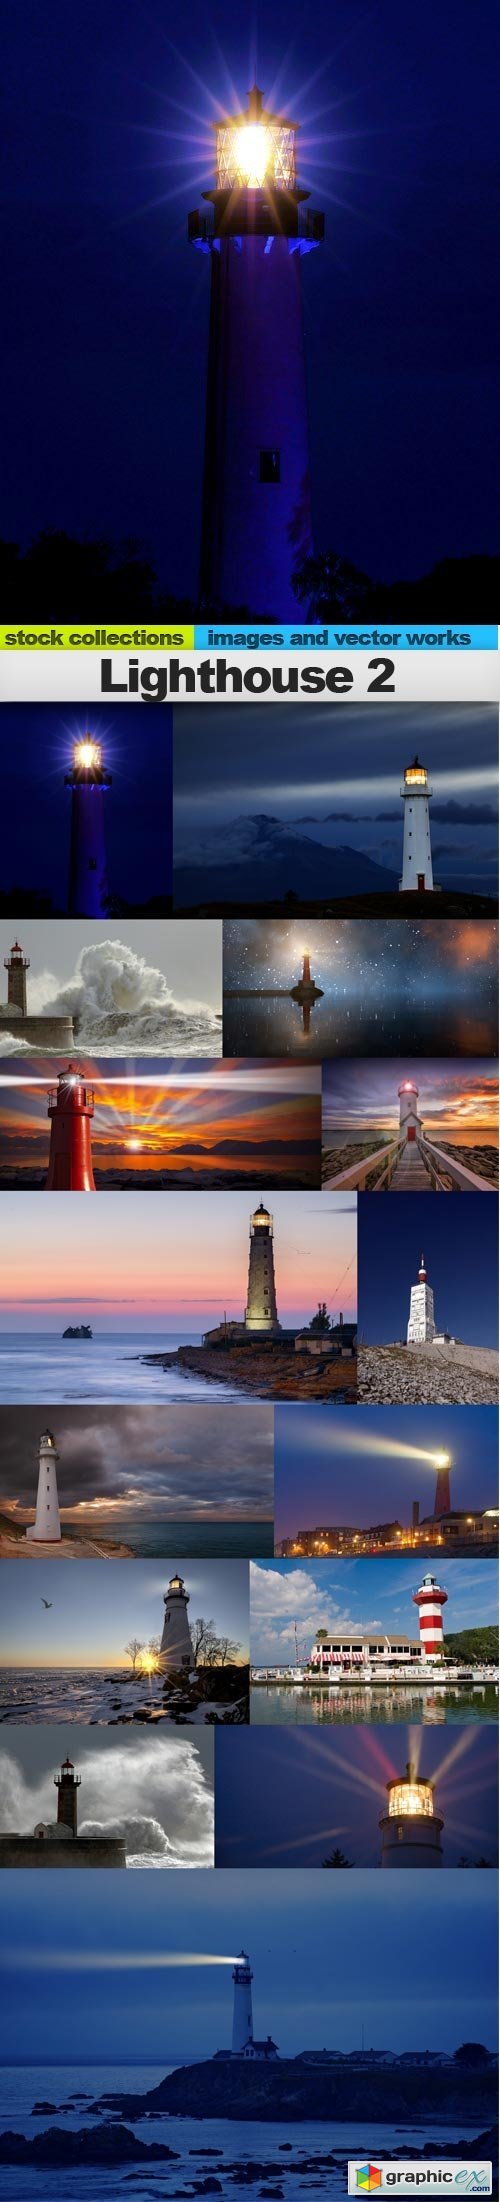 Lighthouse 2, 15 x UHQ JPEG